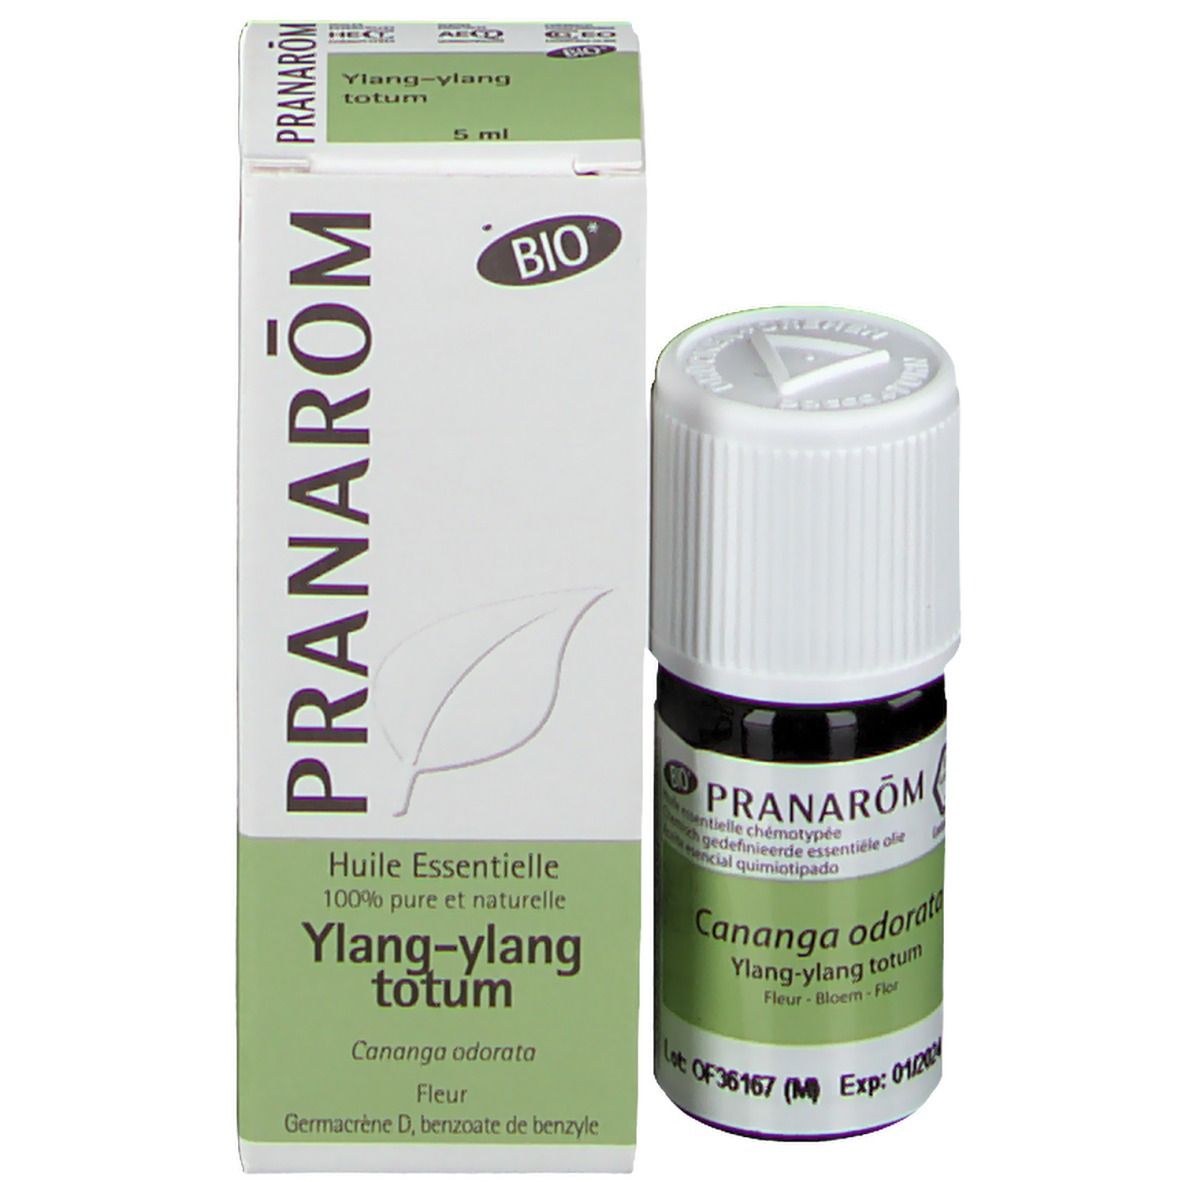 Pranarôm Huile Essentielle Ylang-Ylang Totum Bio 5ml